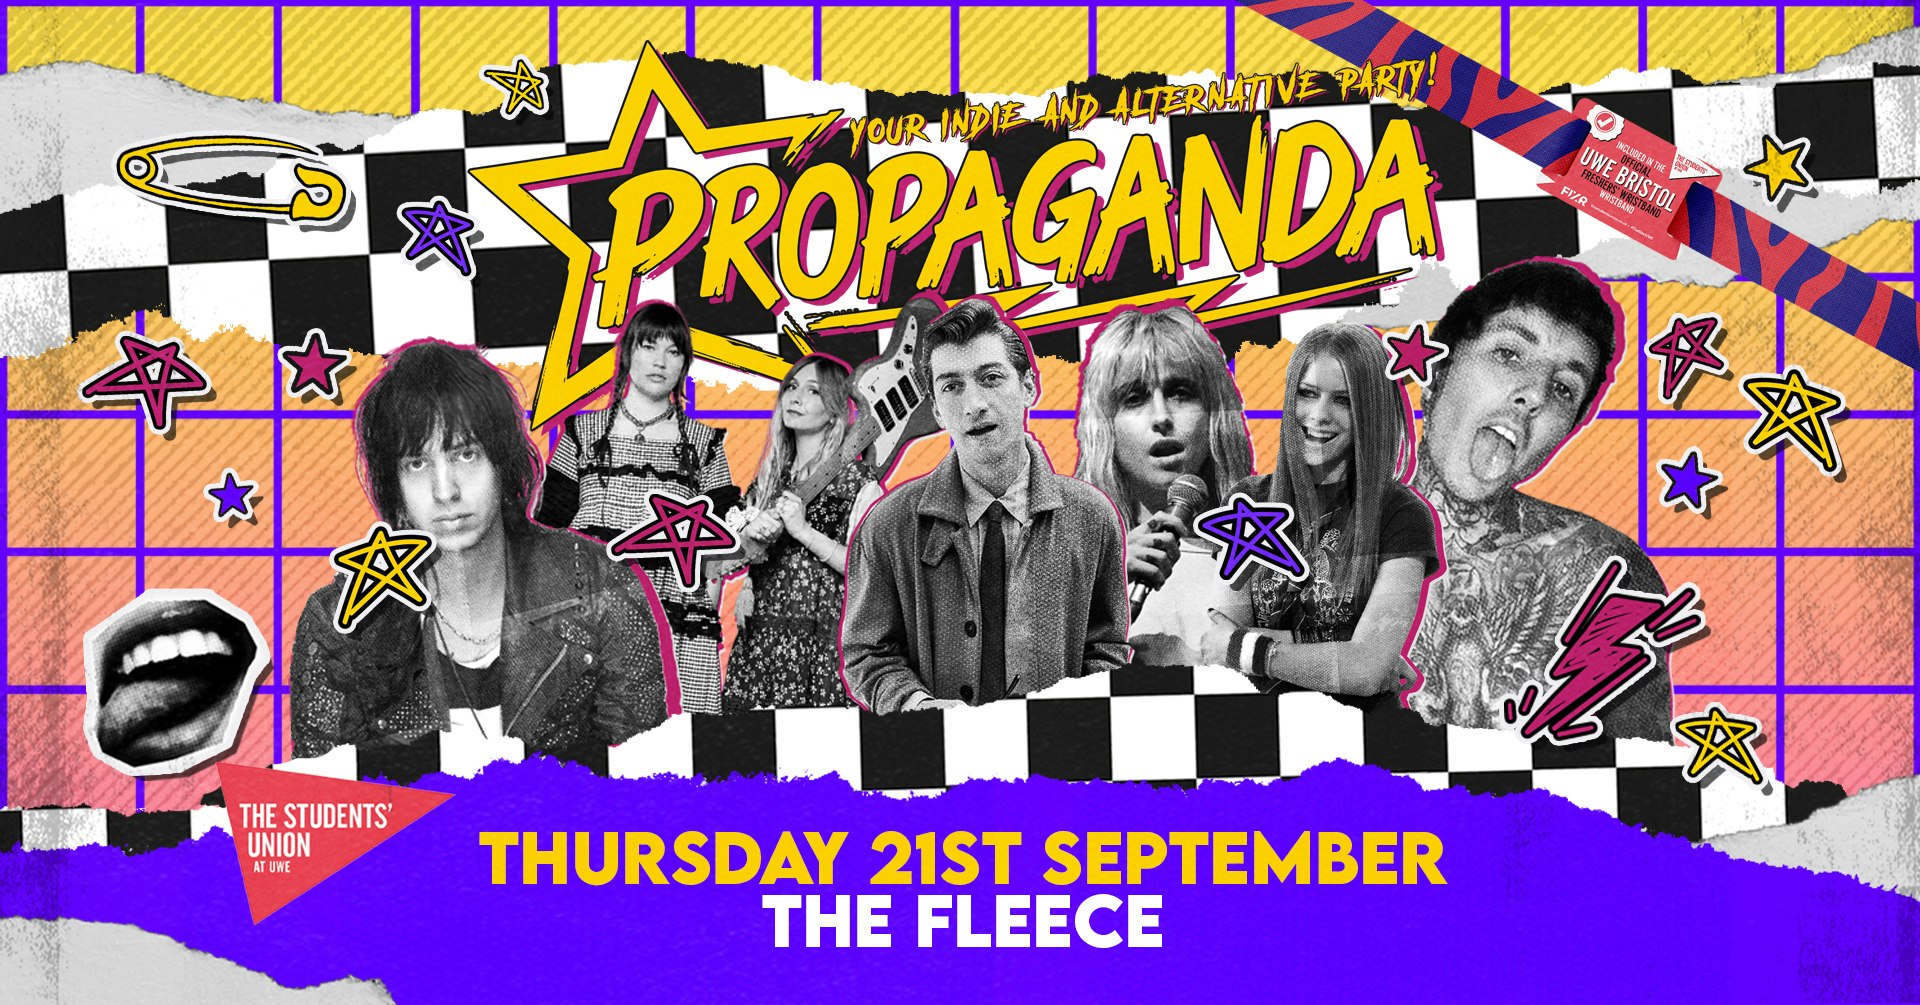 Propaganda Bristol One Off Thursday Indie/ Alternative Party At The Fleece! – Thursday 21st September